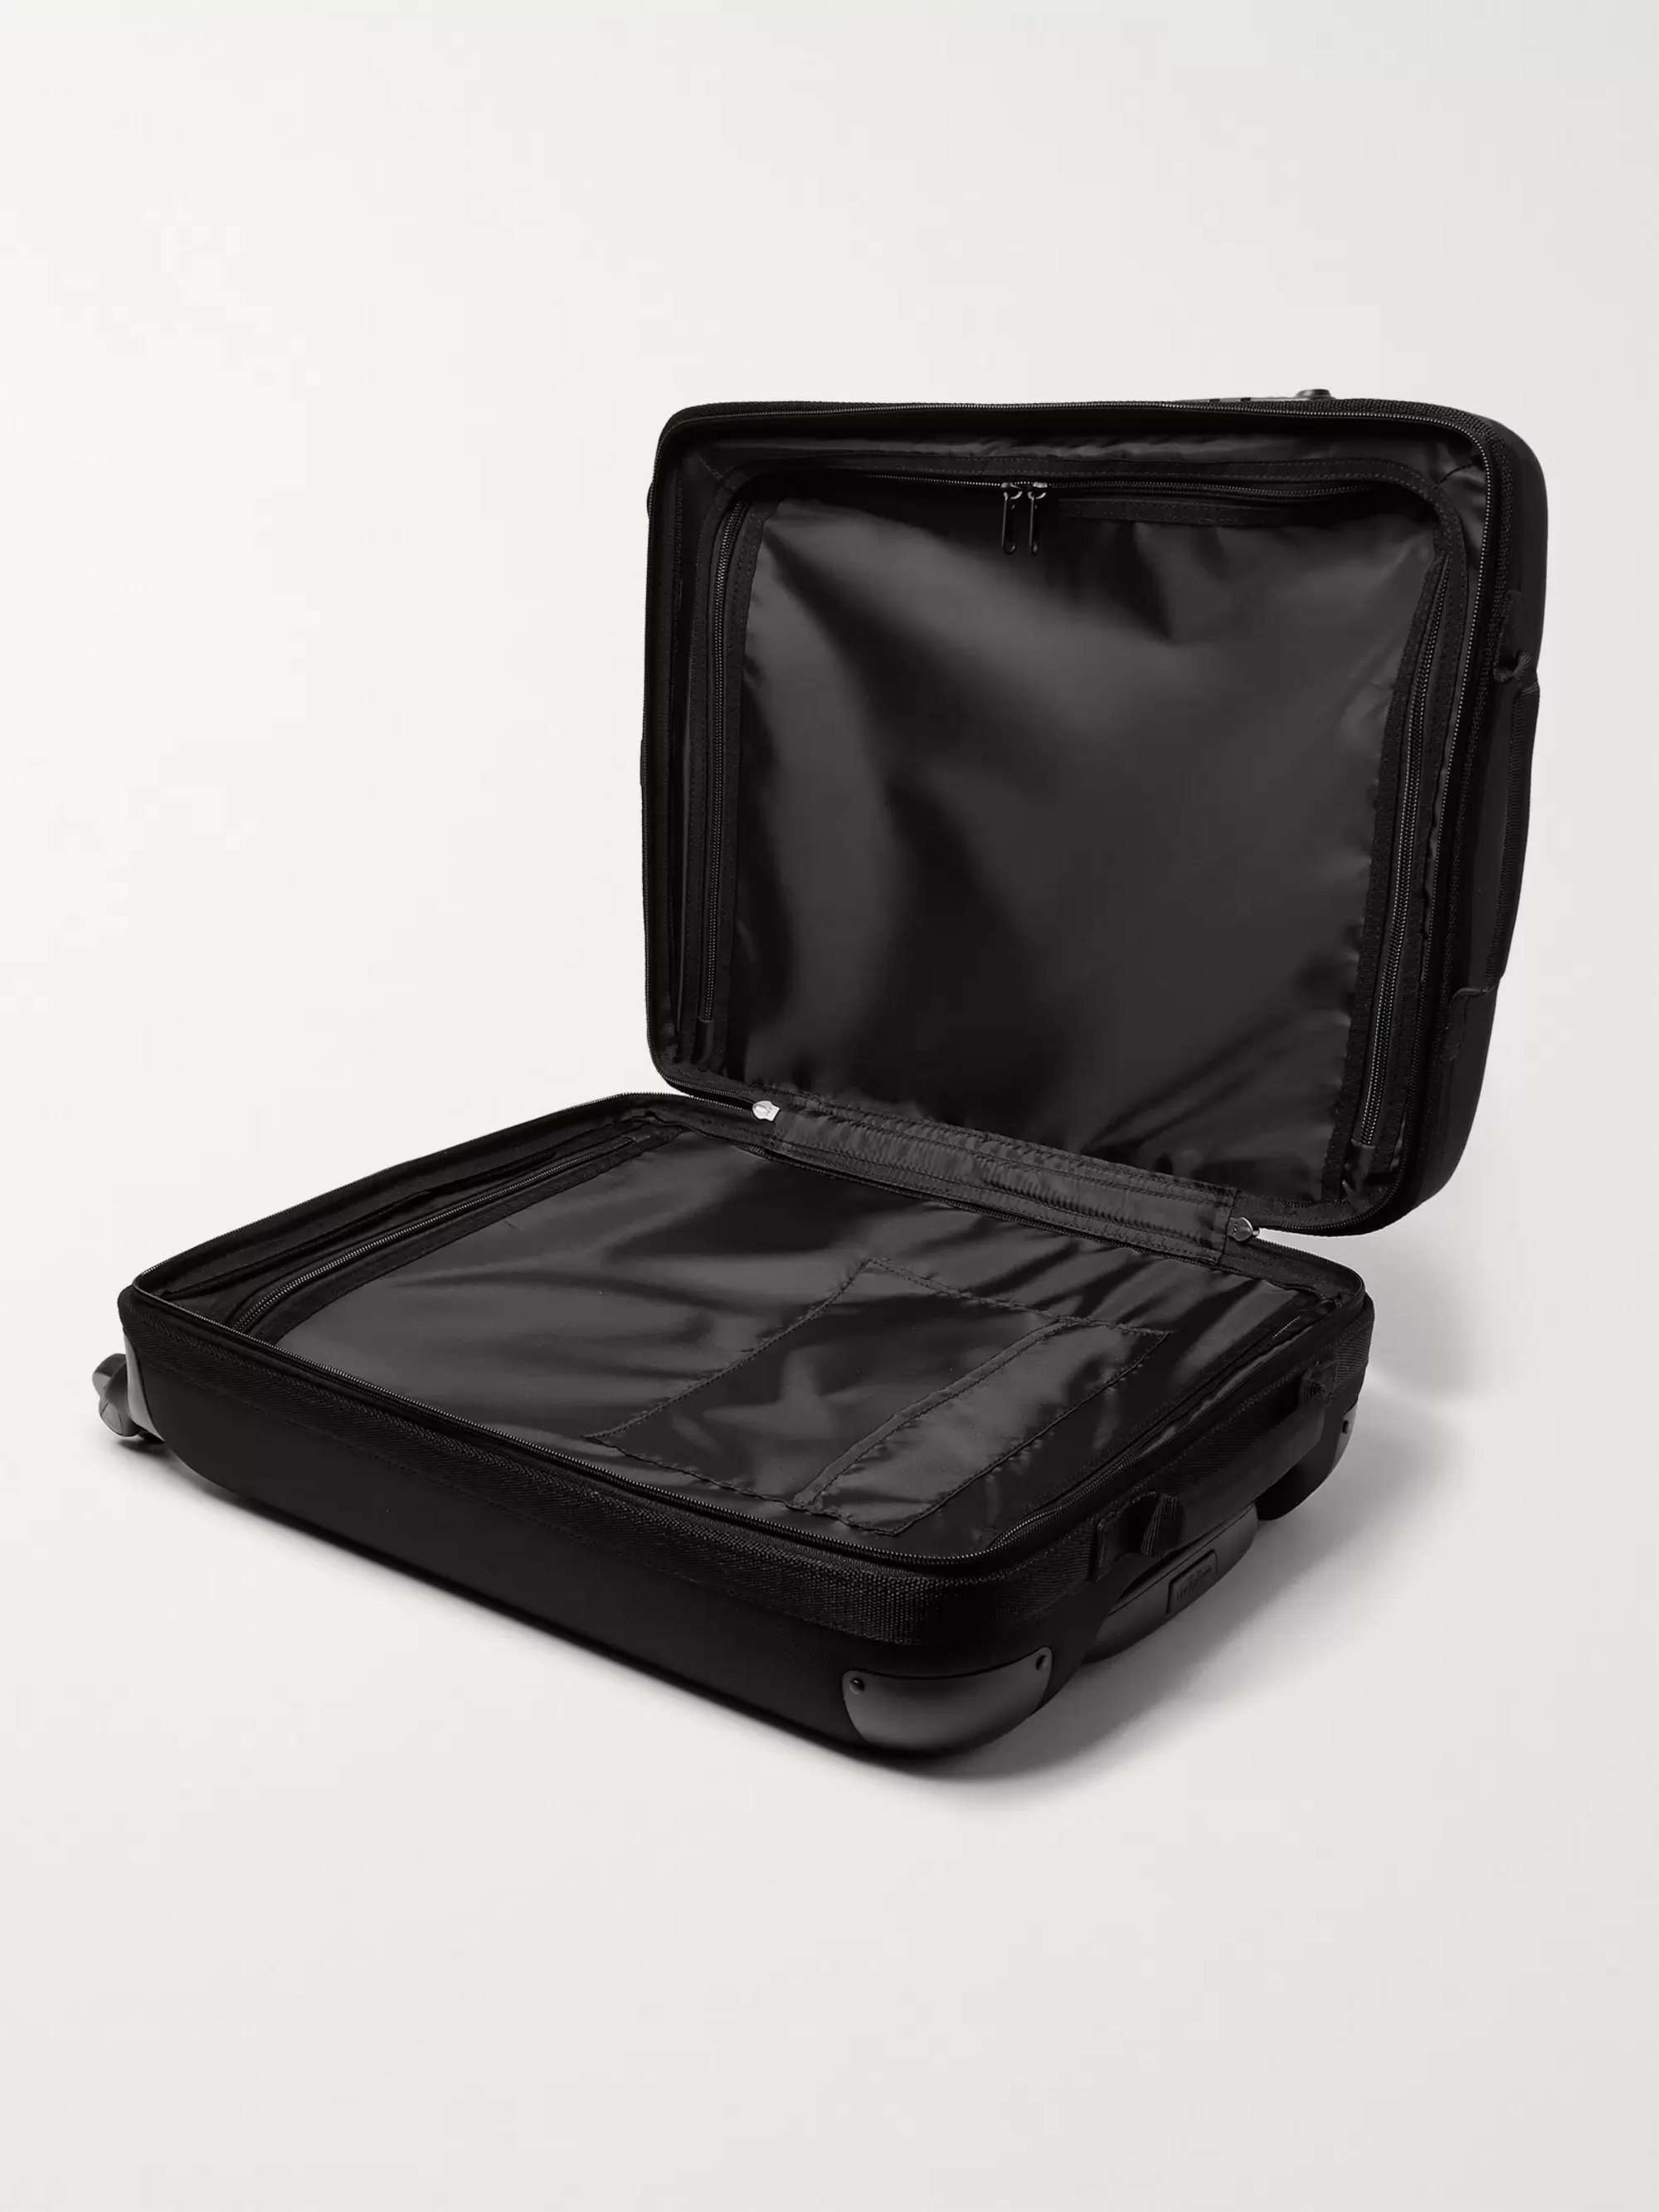 EASTPAK Tranzshell Multiwheel 54cm Suitcase